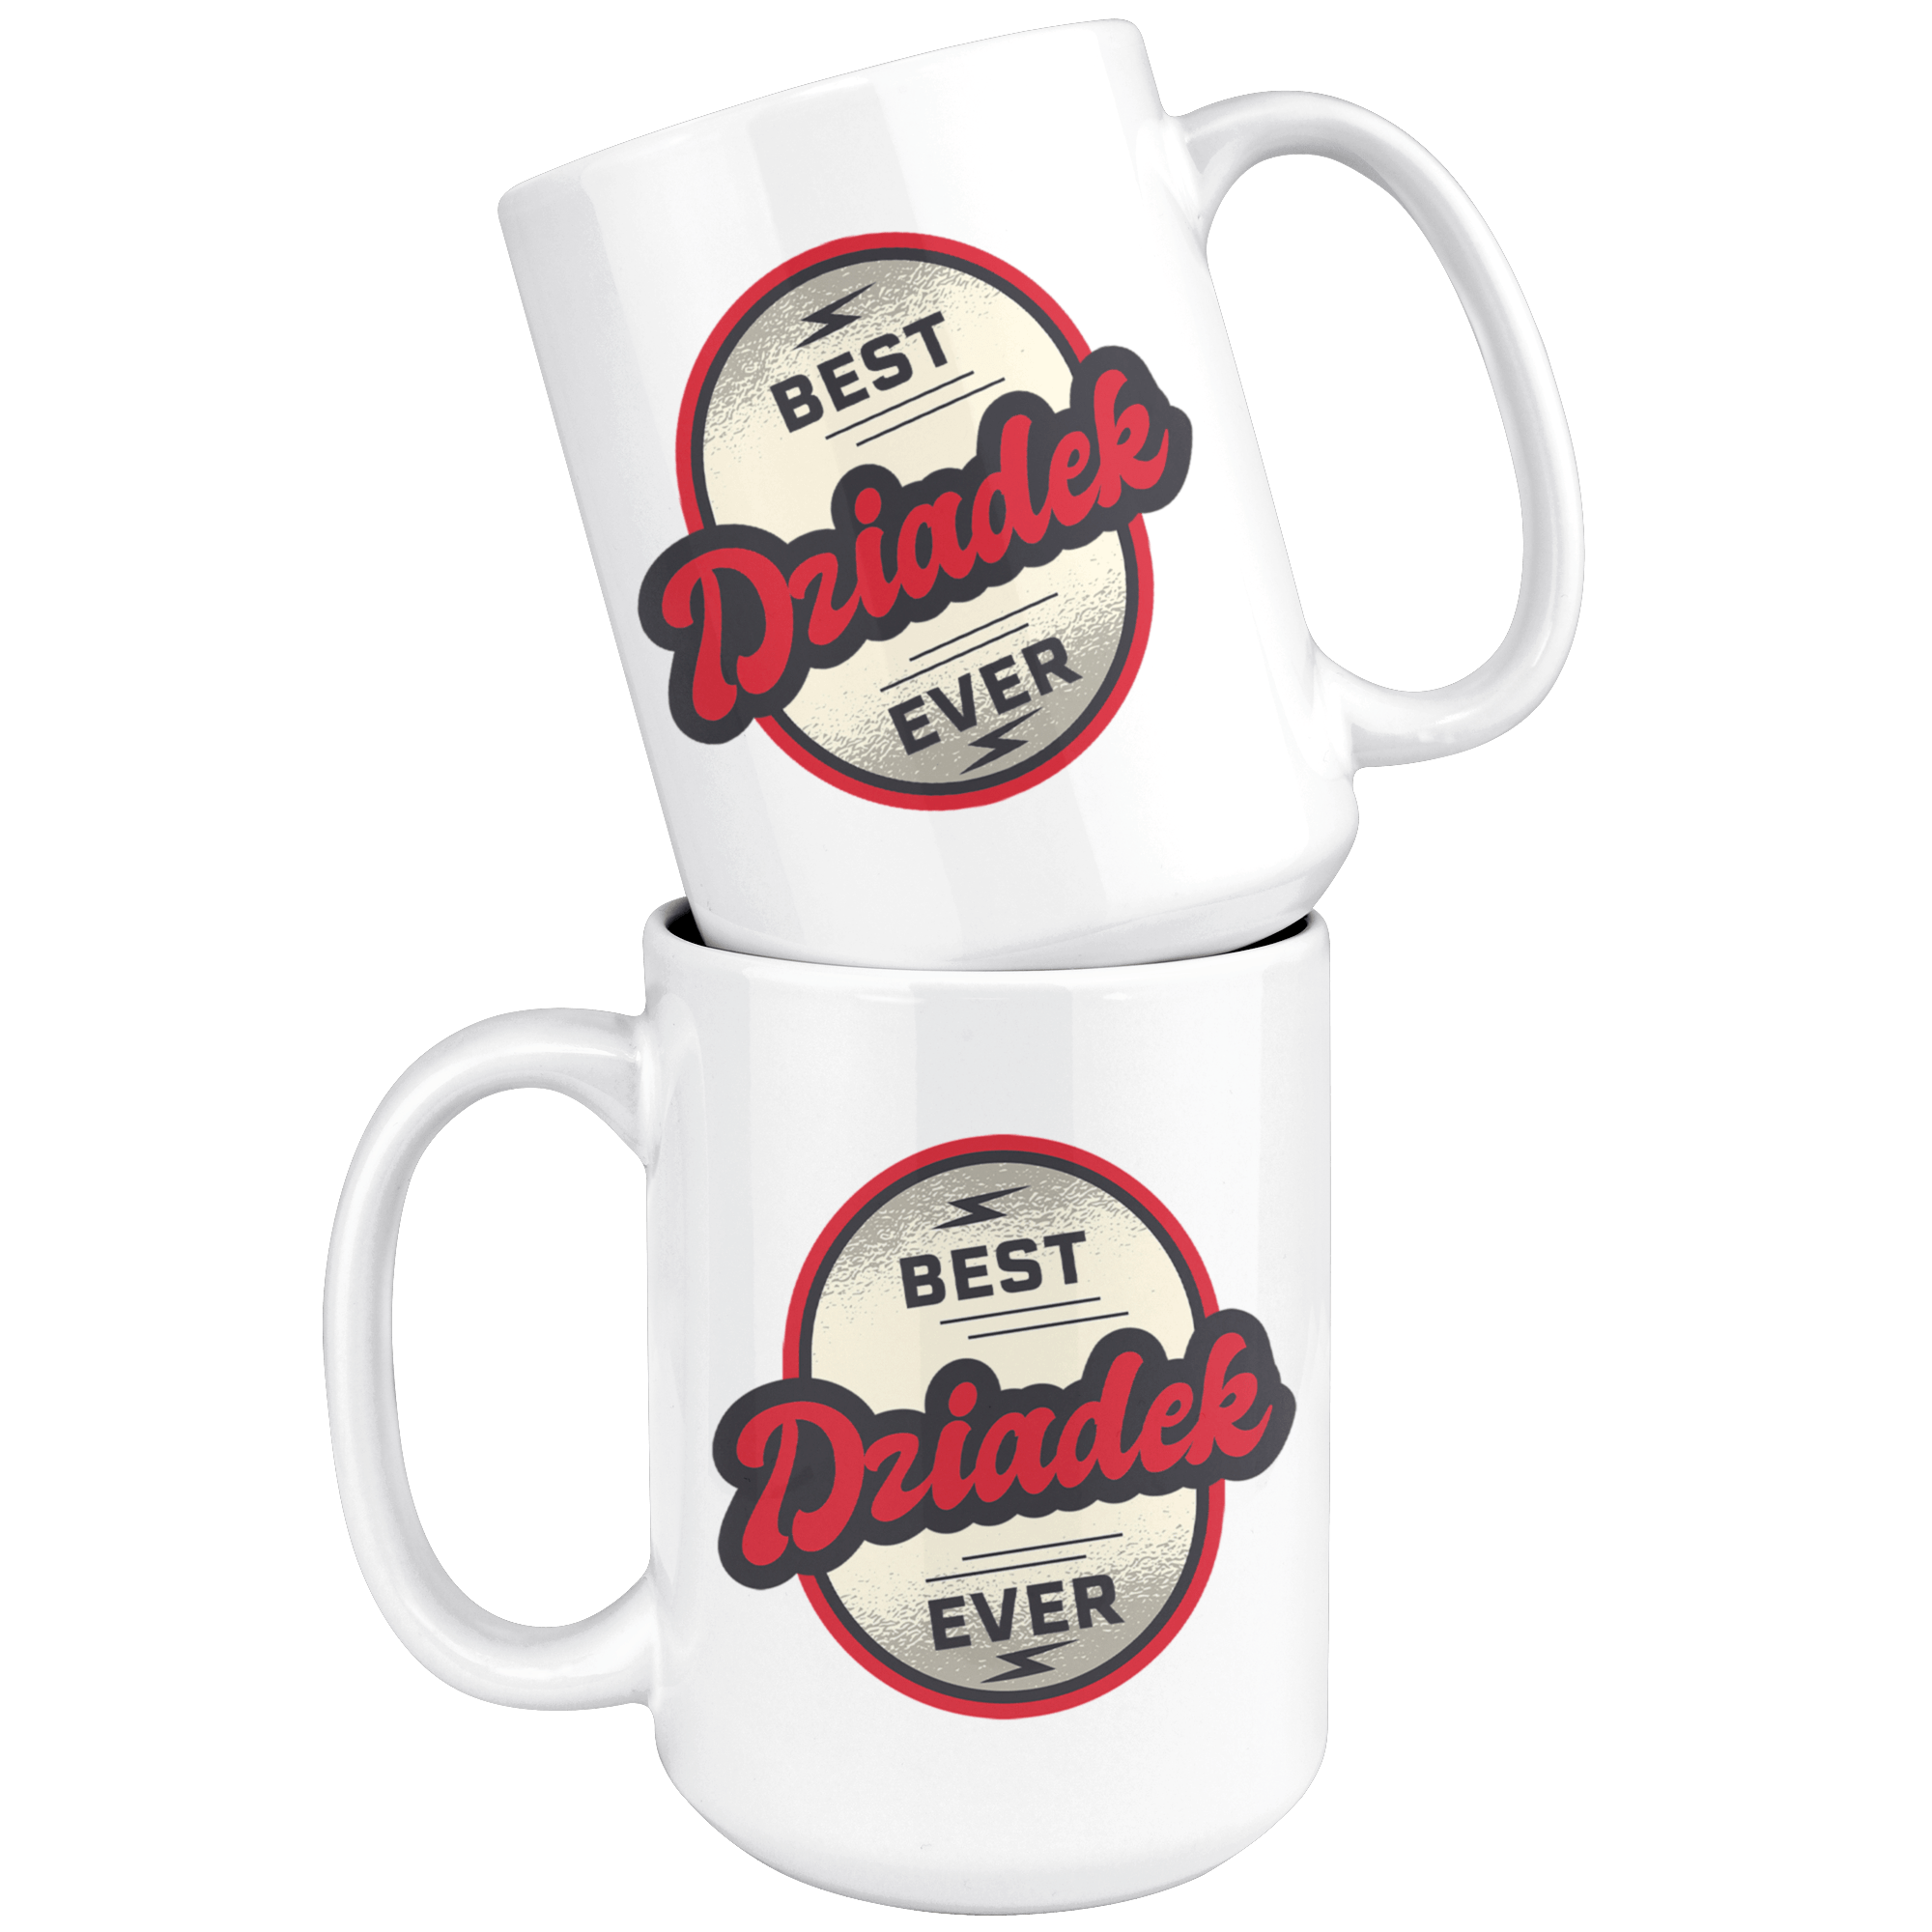 Best Dziadek Ever Polish Coffee Mug Drinkware teelaunch   